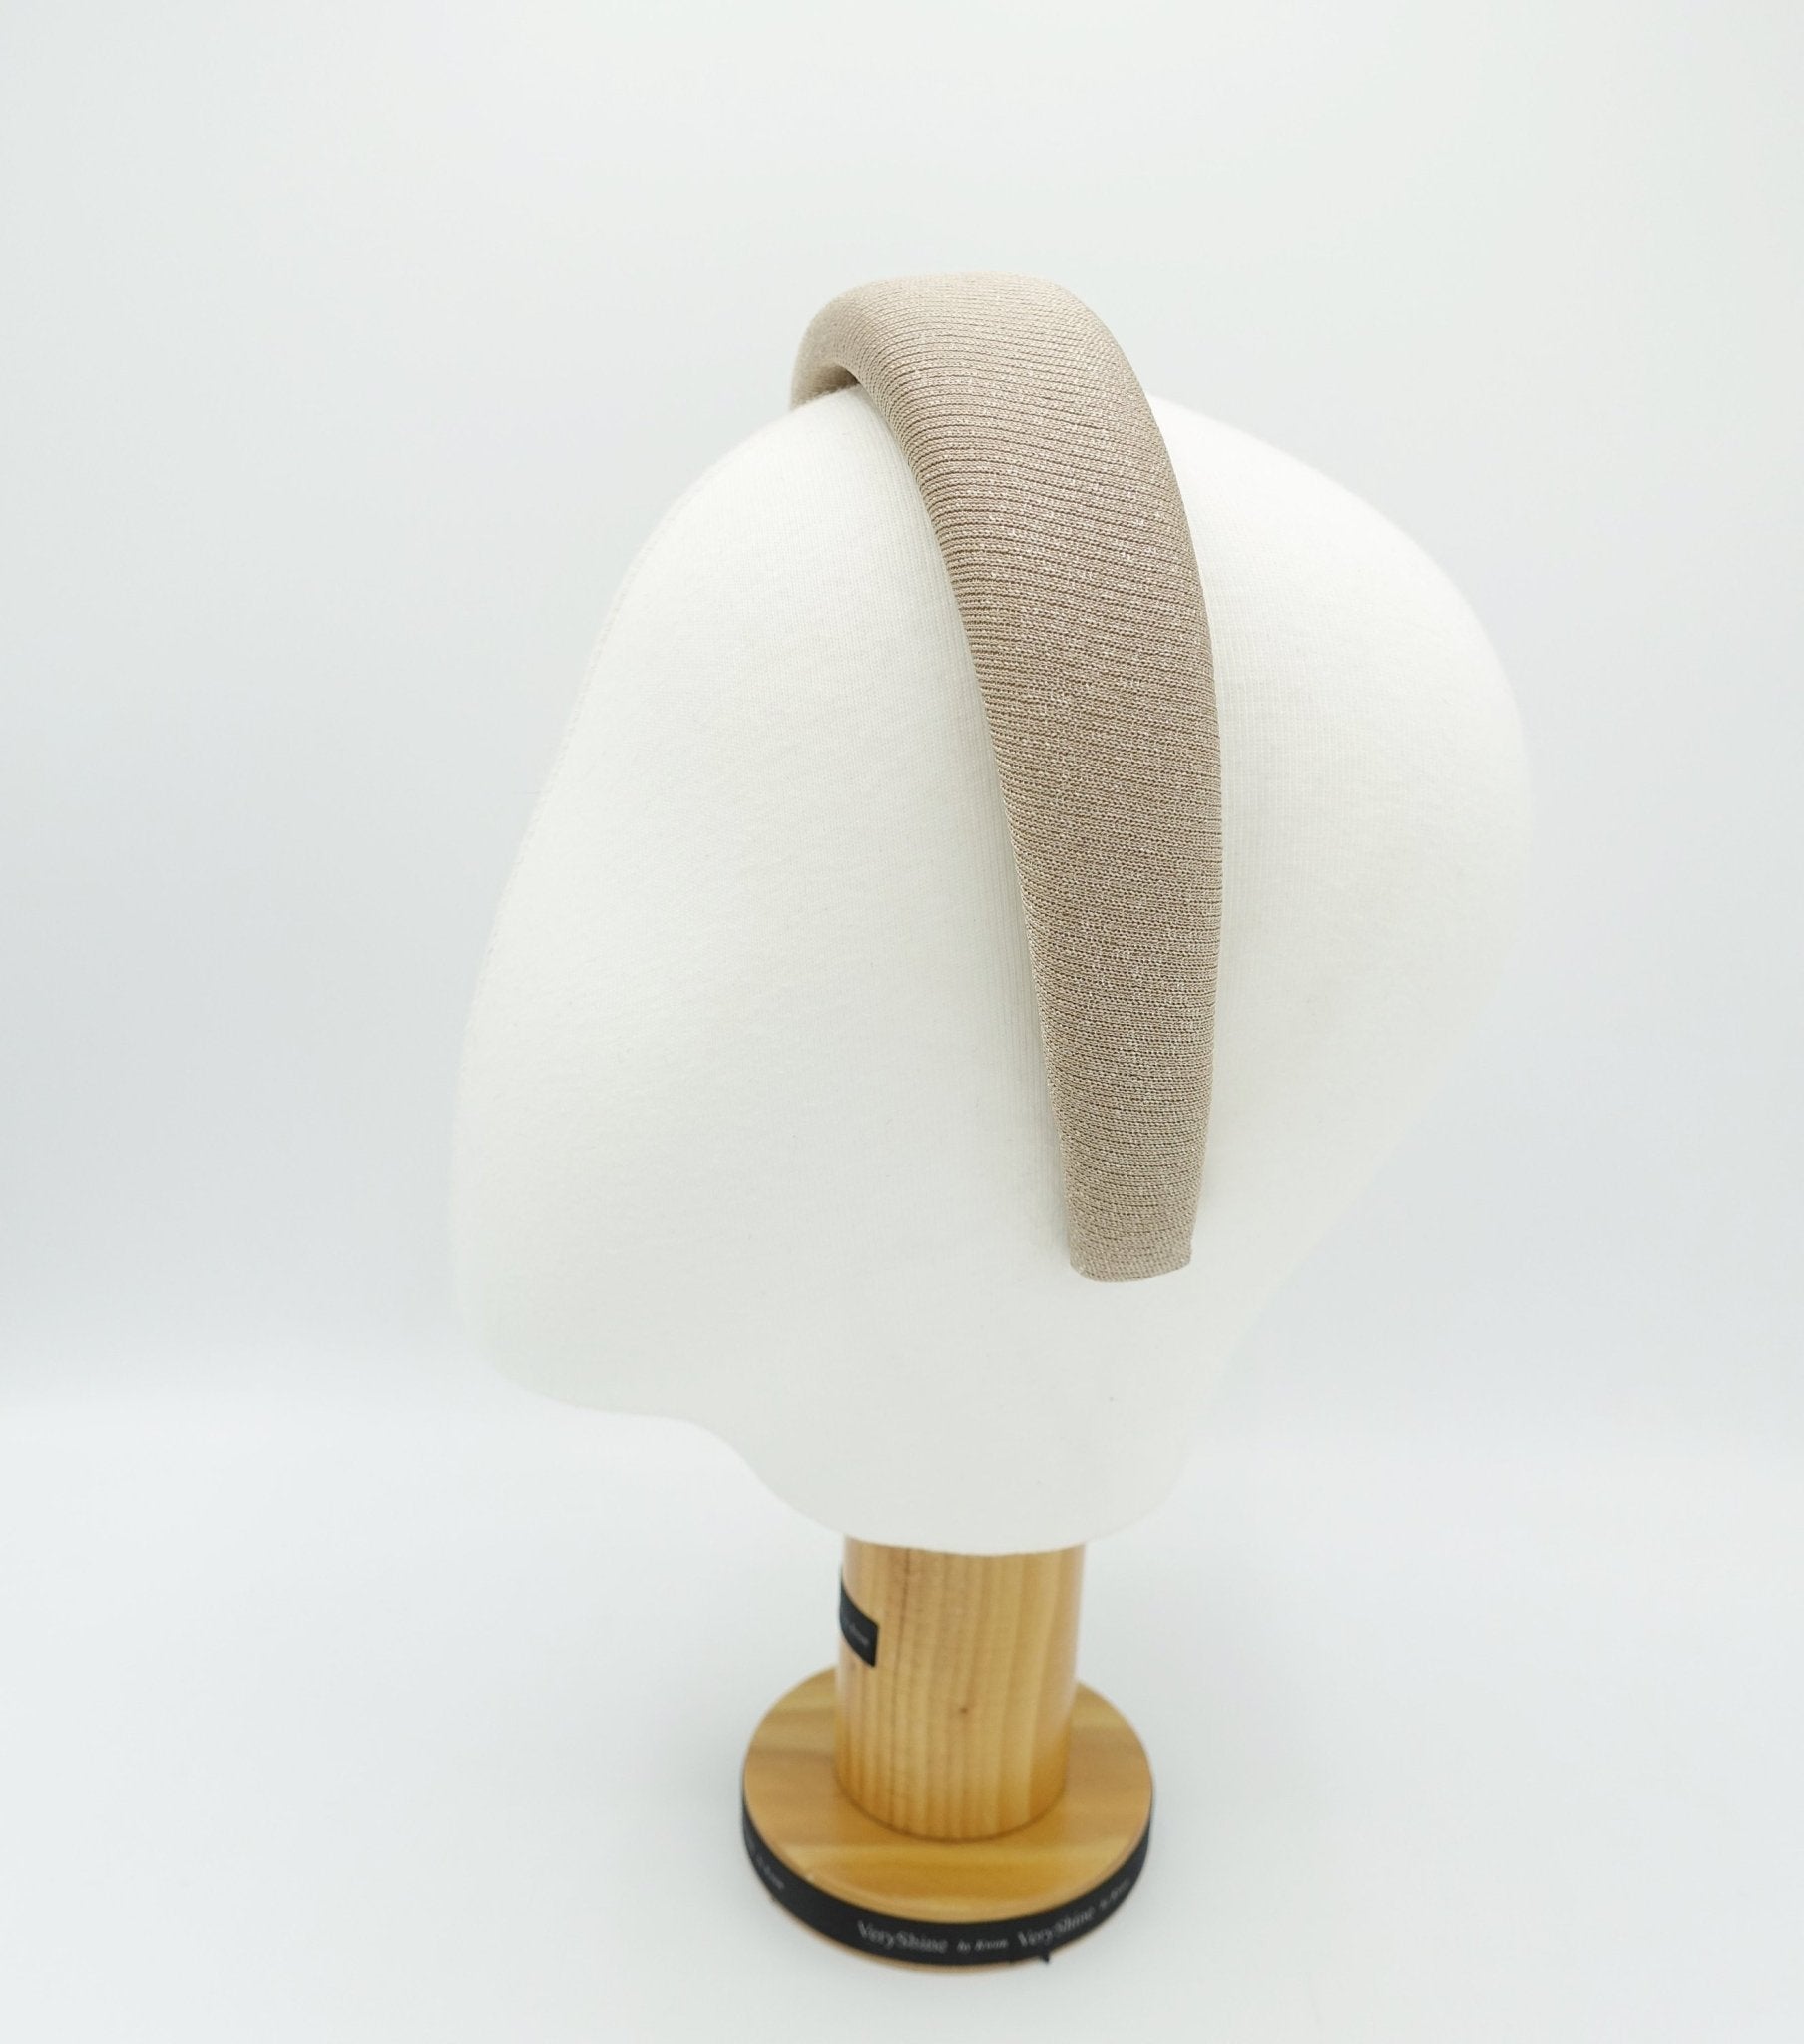 VeryShine pearl shimmer headband padded headband stylish fashion hairband for women